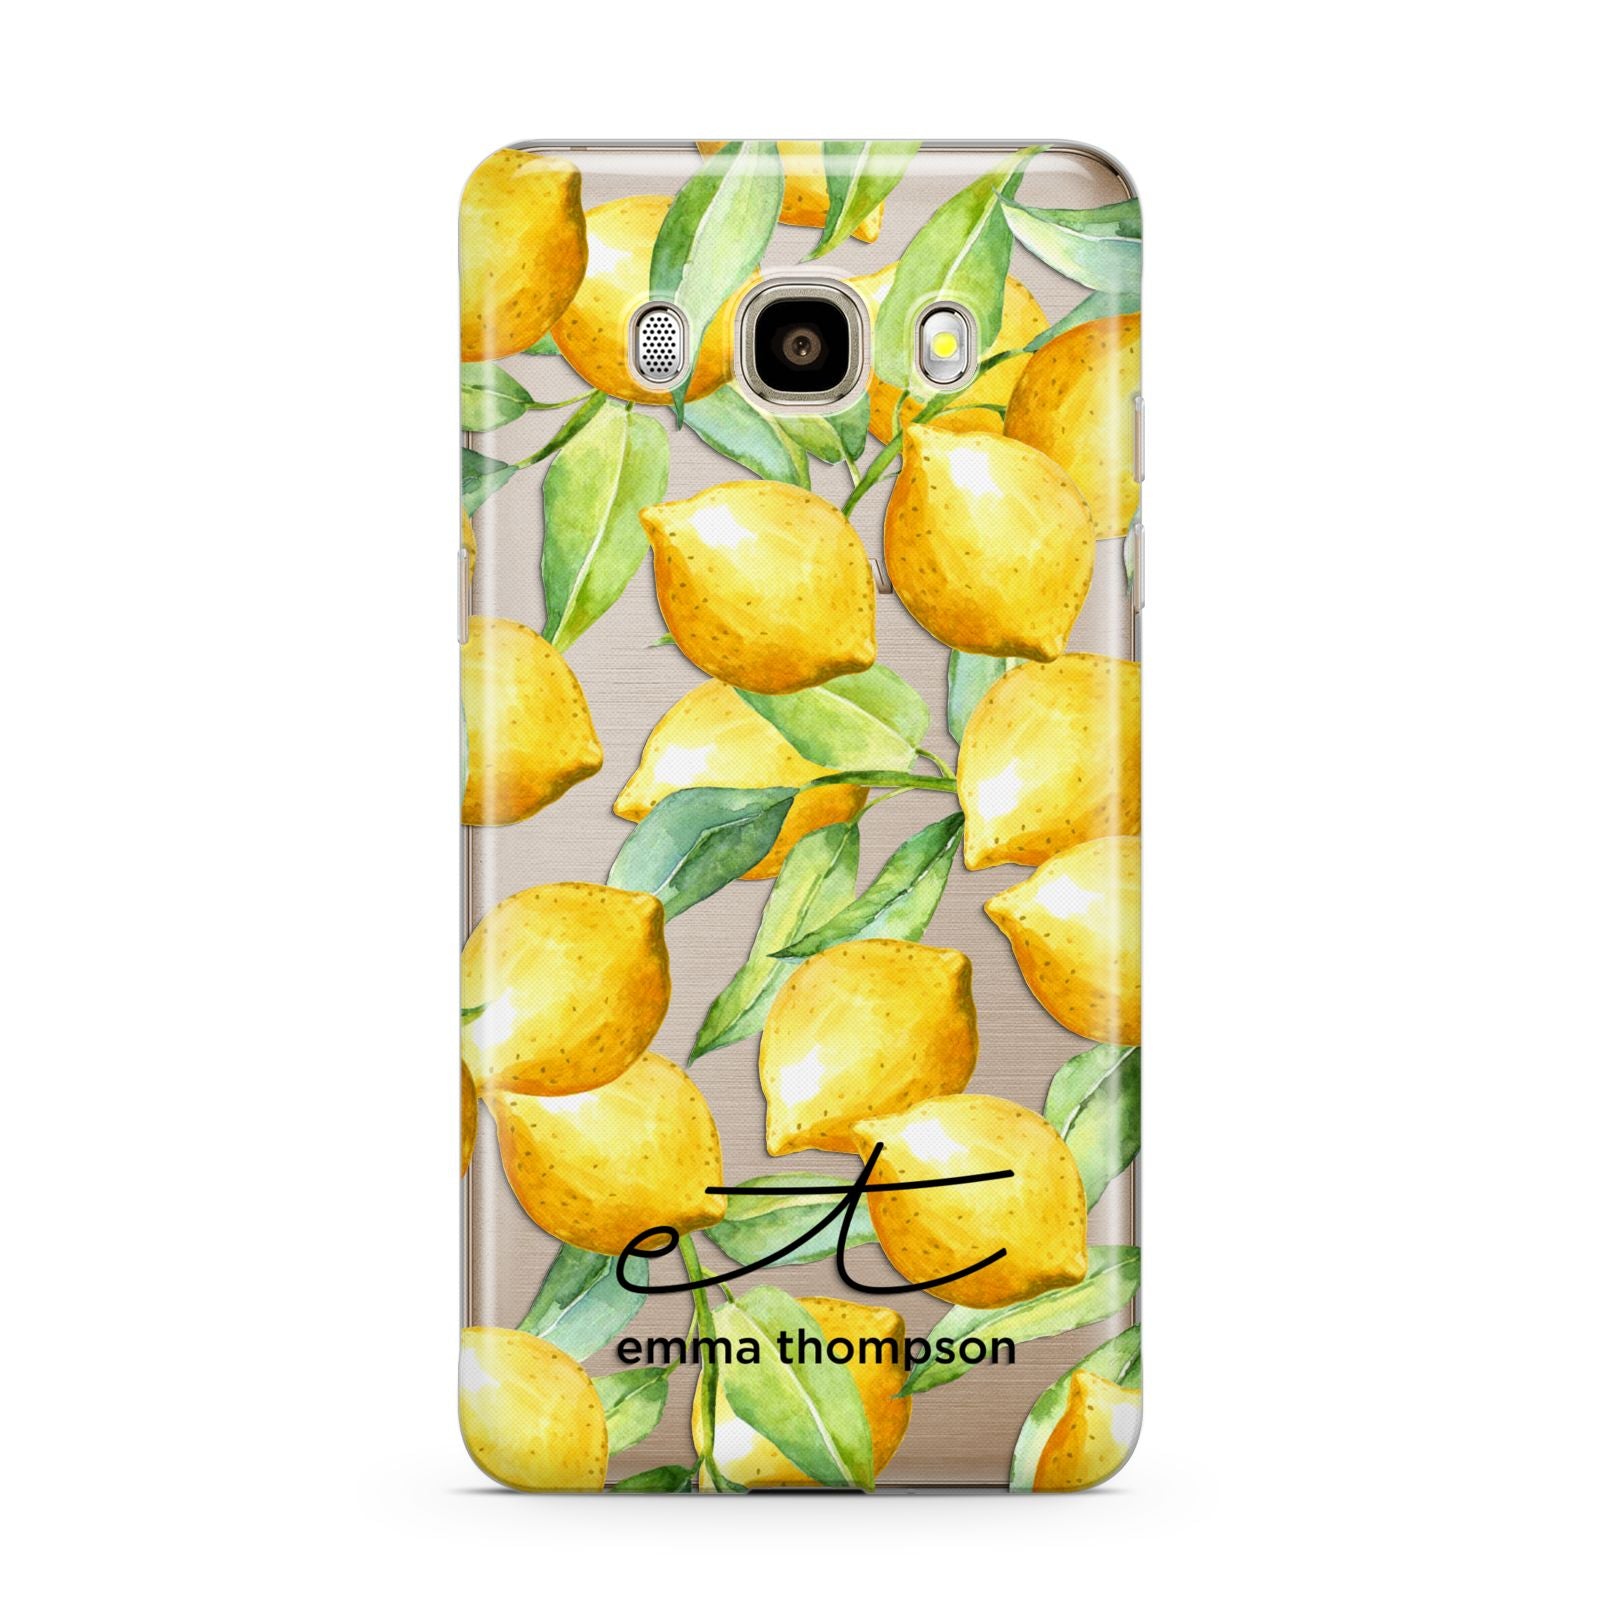 Personalised Lemons of Capri Samsung Galaxy J7 2016 Case on gold phone